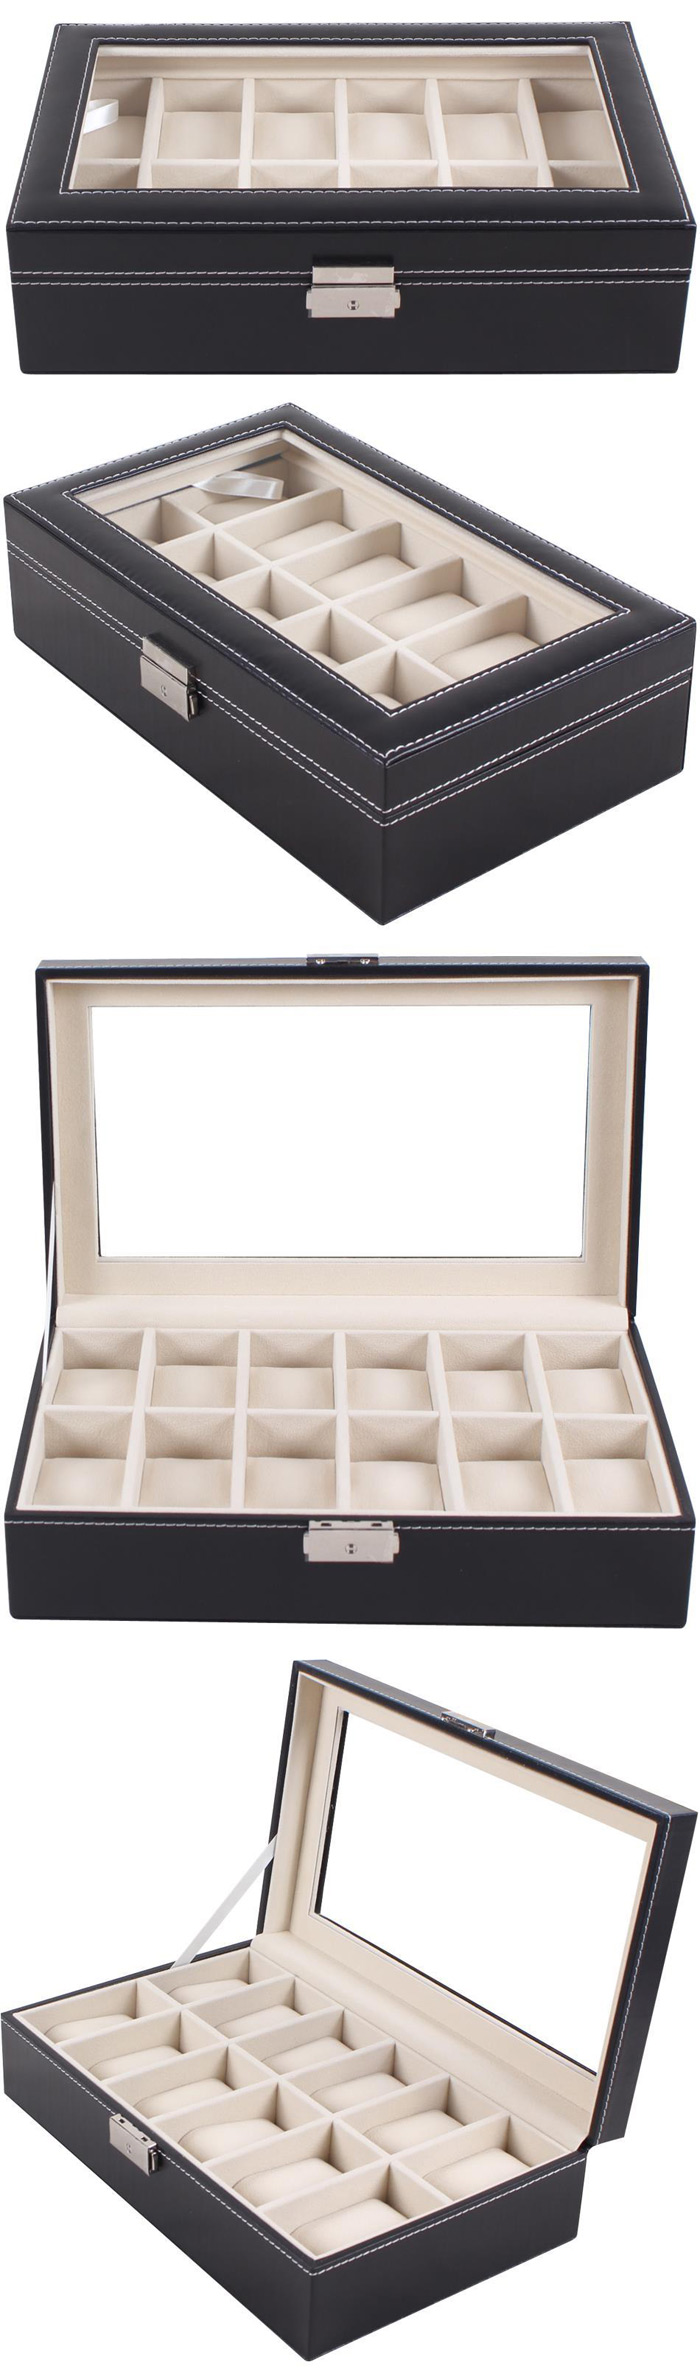 Watch Jewelry Storage Case 12 Grids PU Leather Display Box for Bracelet Shop